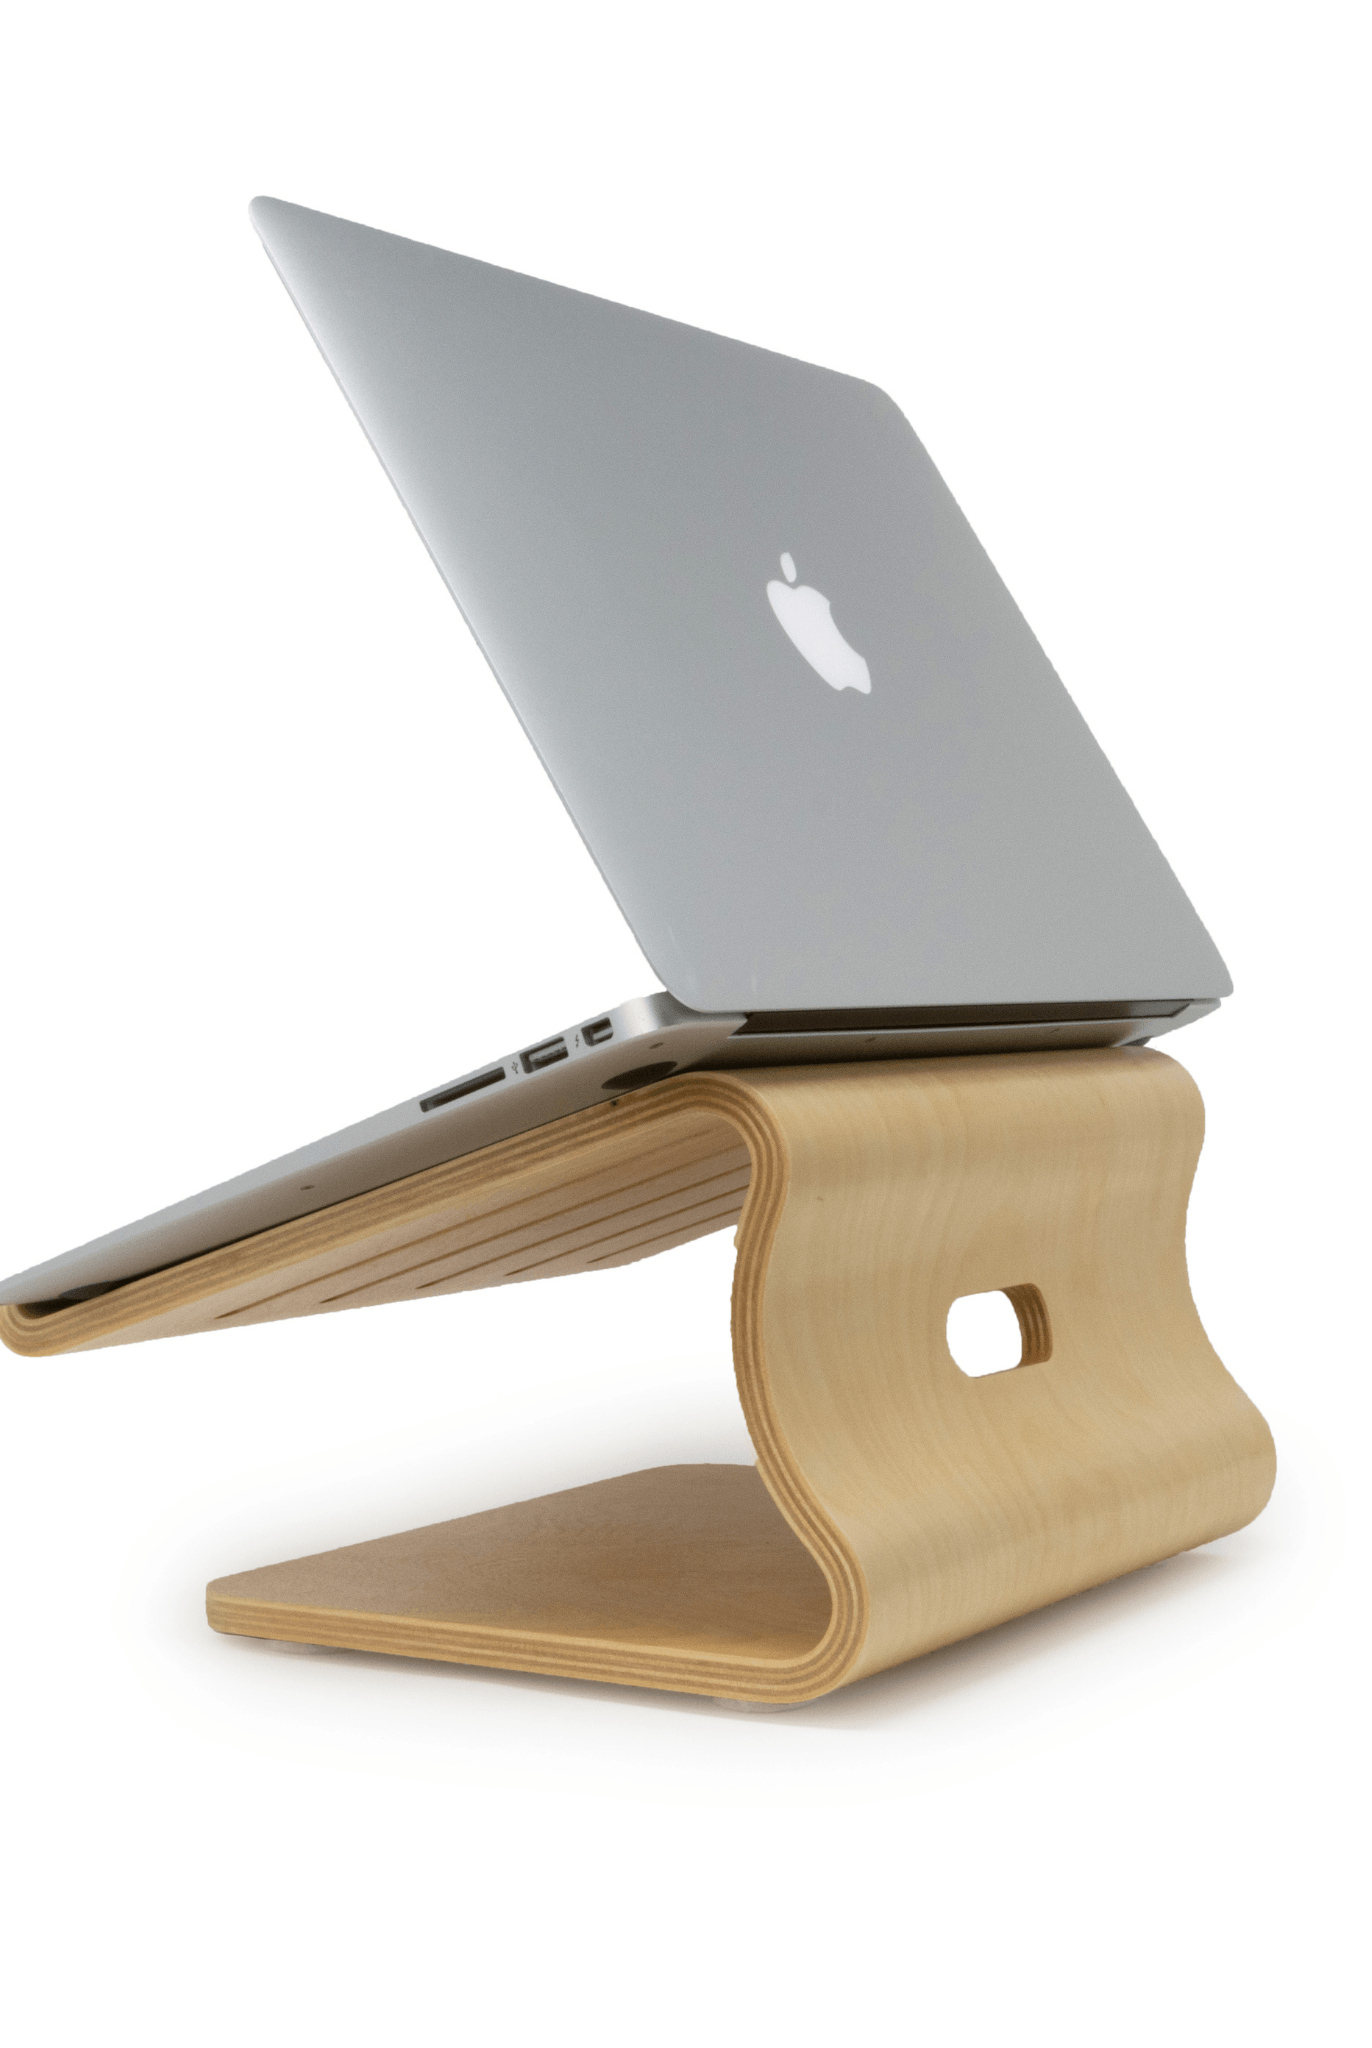 Enkel Ergonomic Birch Wood Laptop Stand from Active Goods Canada